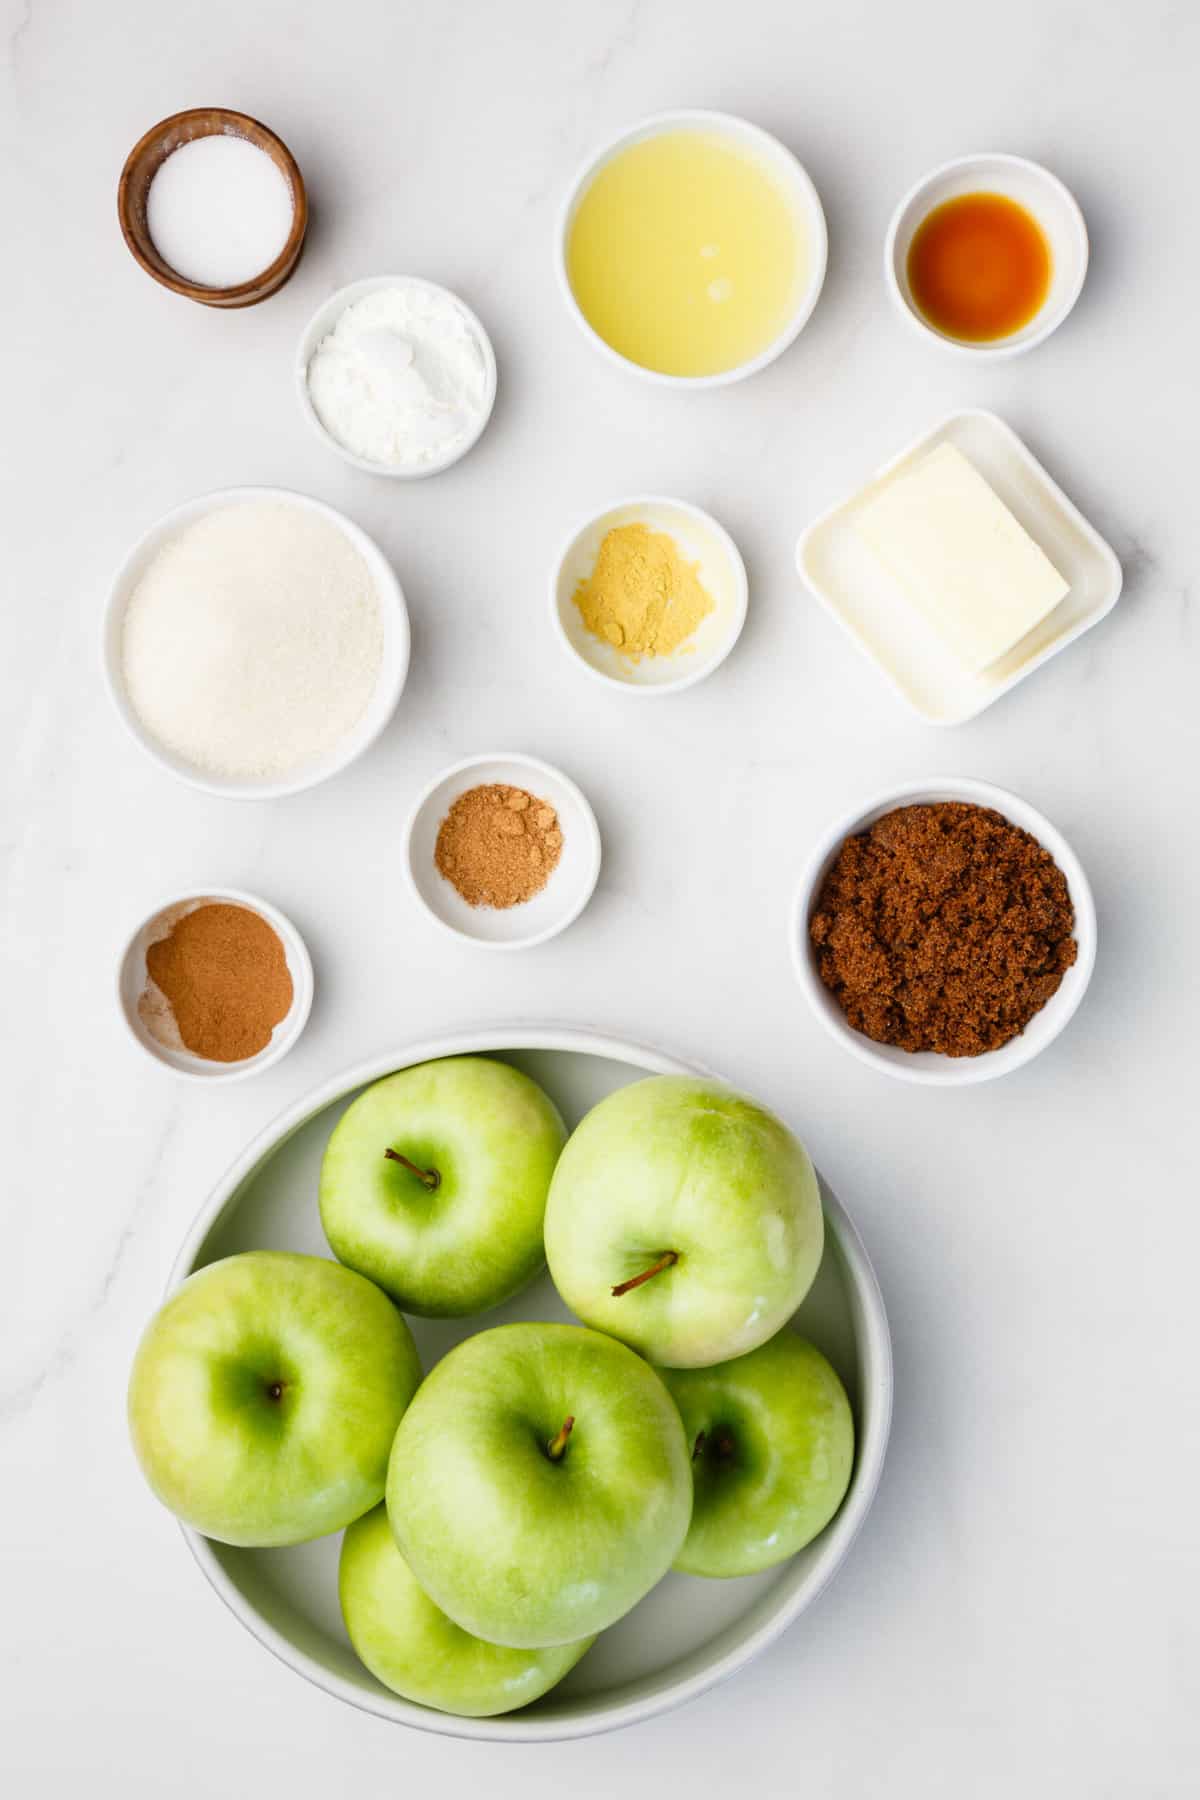 ingredients to make apple pie filling